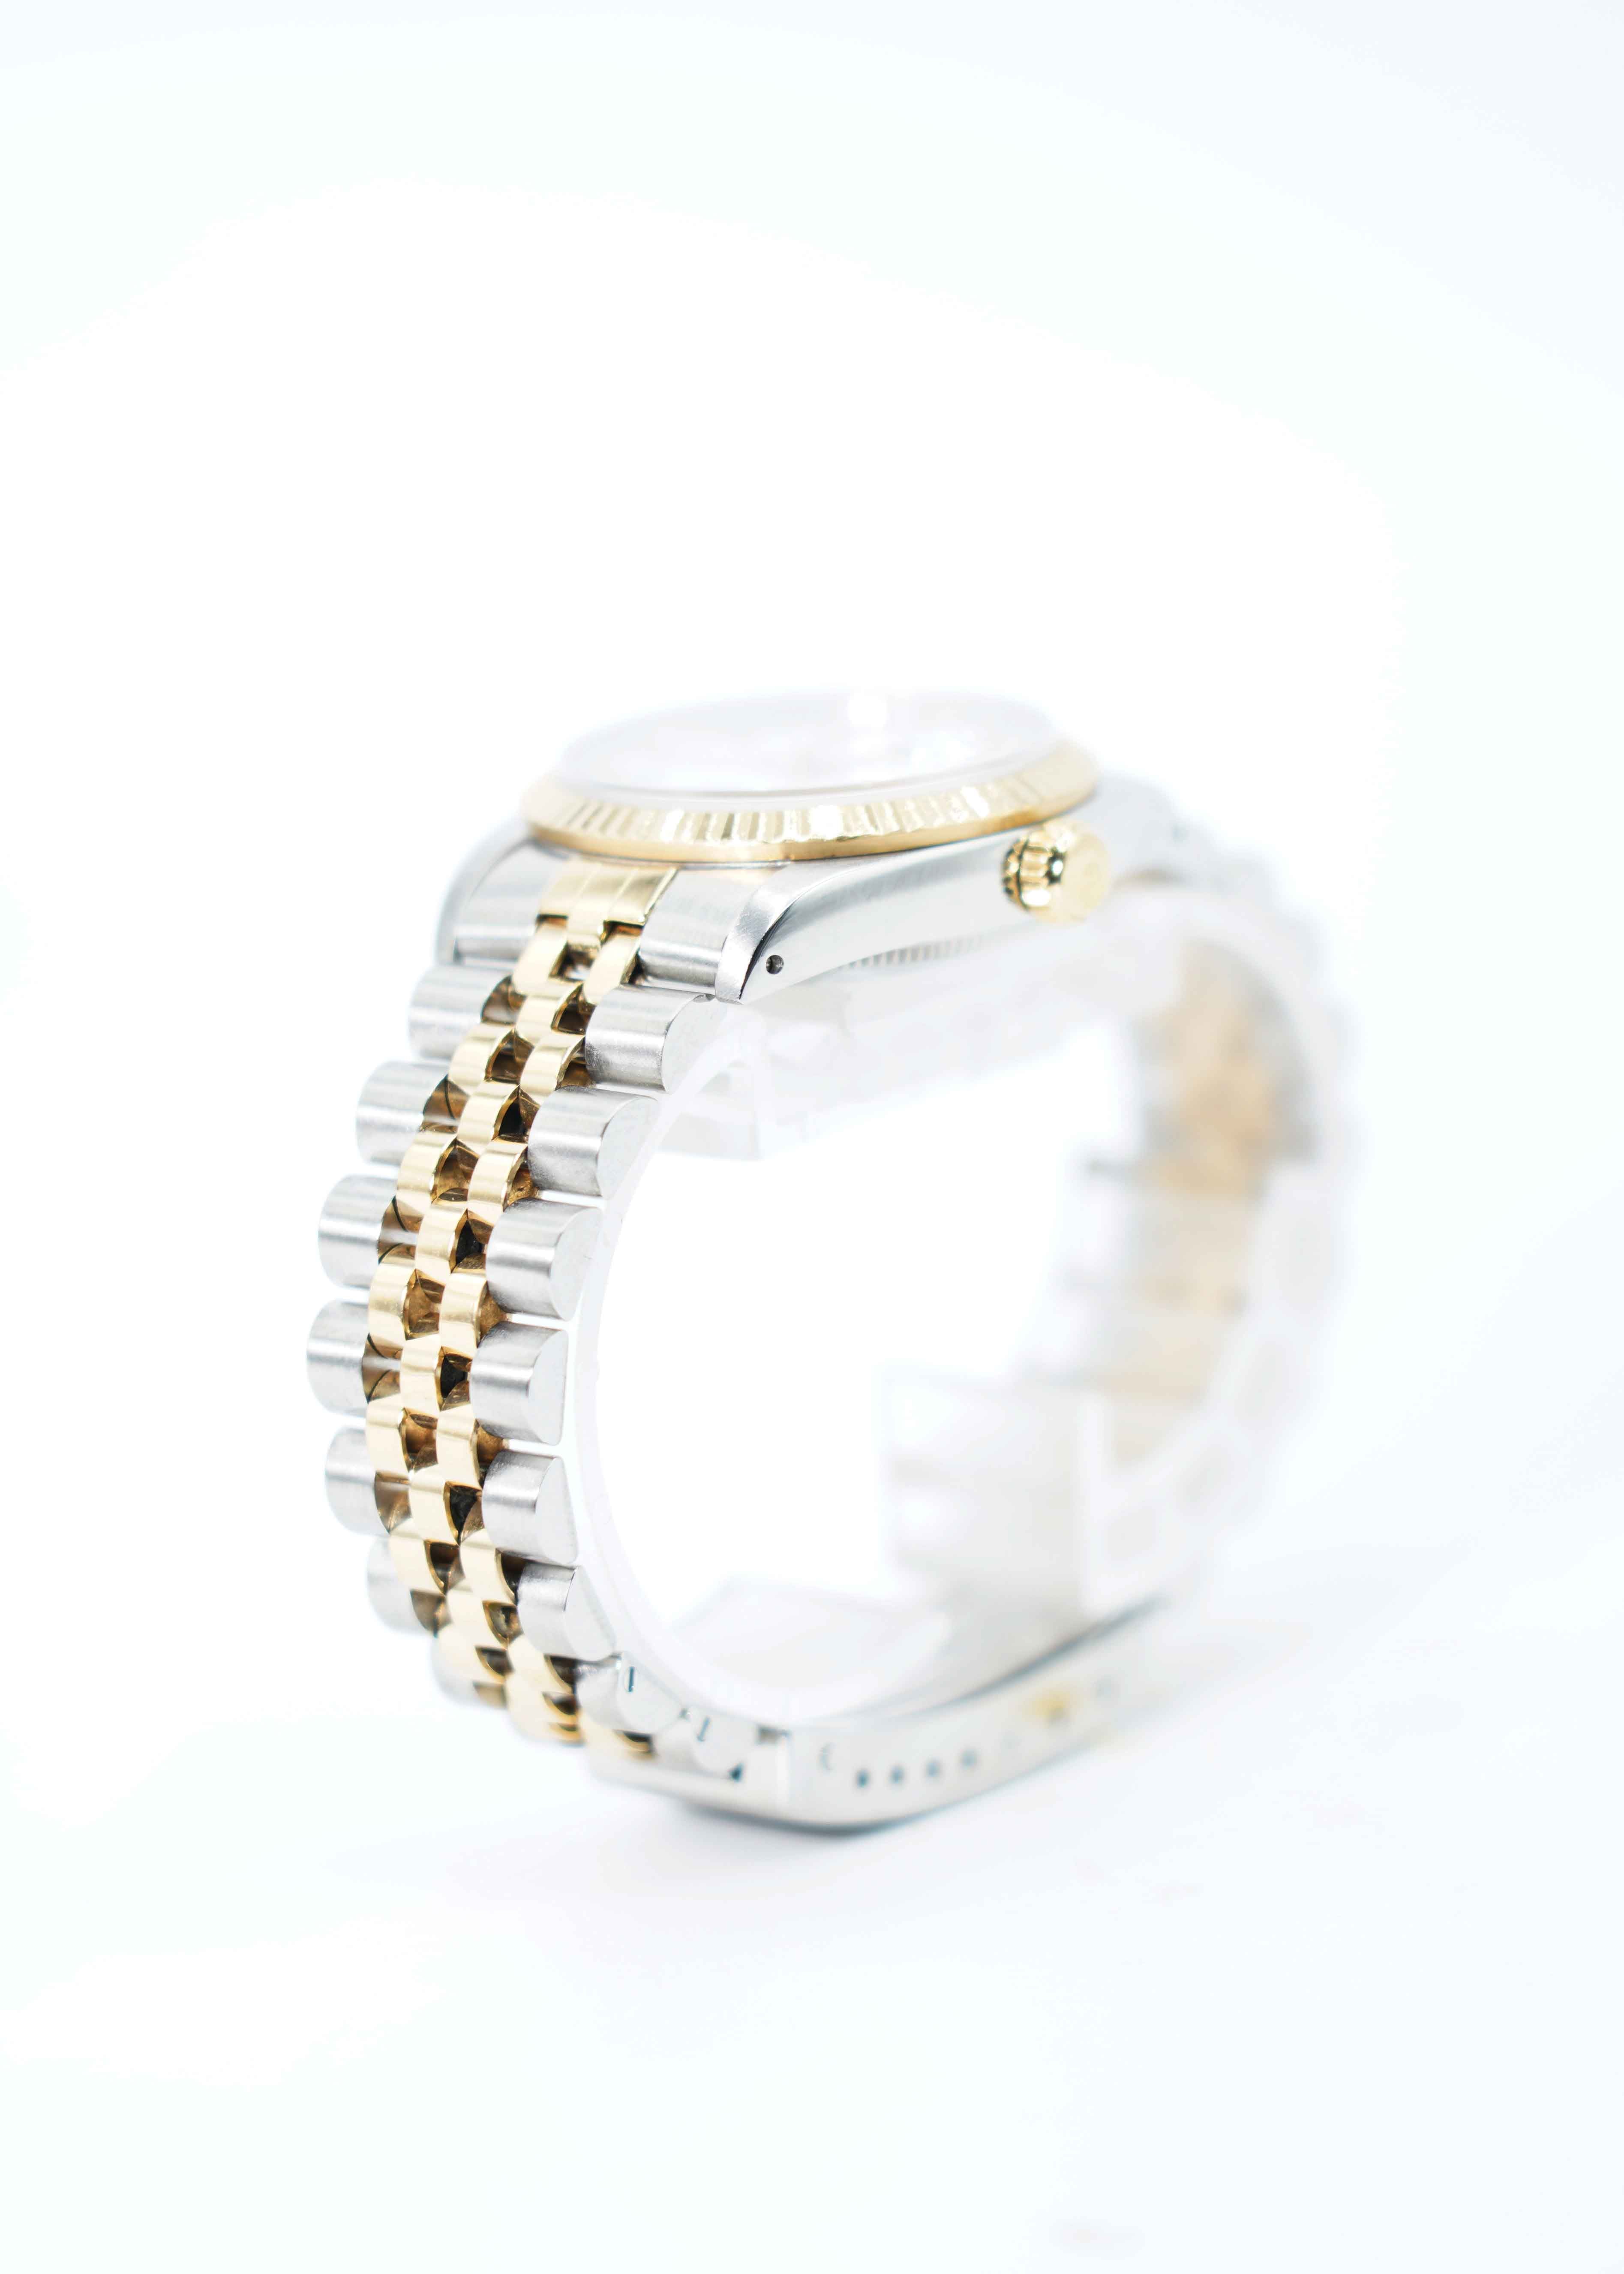 Rolex 31MM Datejust Lady's Watch 18K Yellow Gold Steel Ref 68273